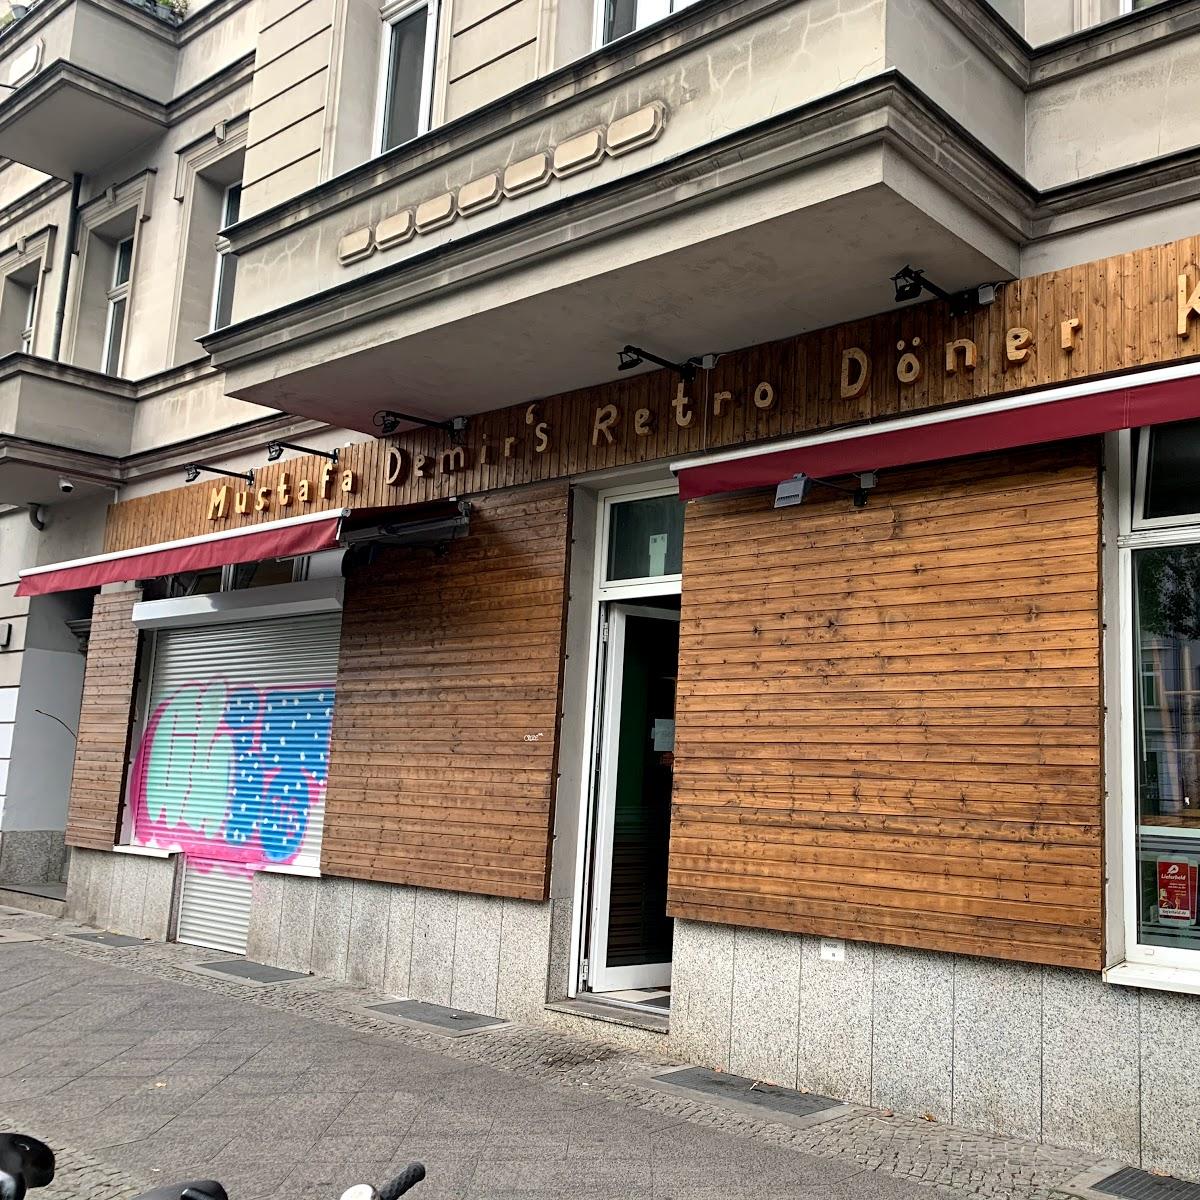 Restaurant "Mustafa Demir’s Retro Kebap" in Berlin